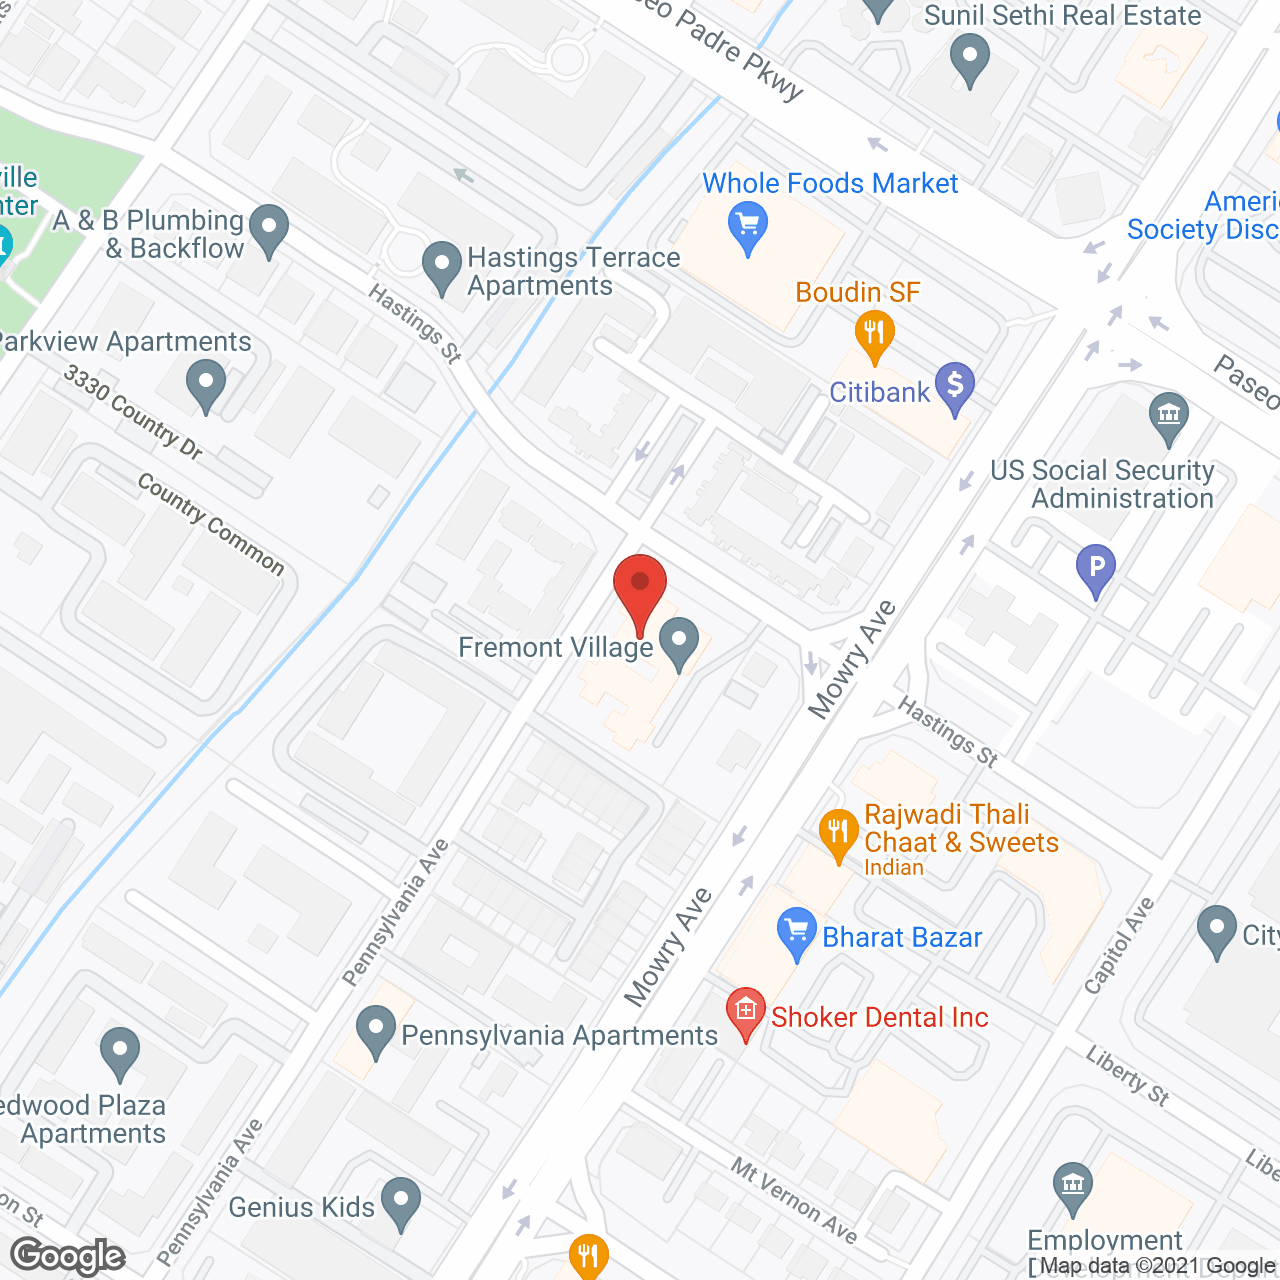 Fremont Village in google map